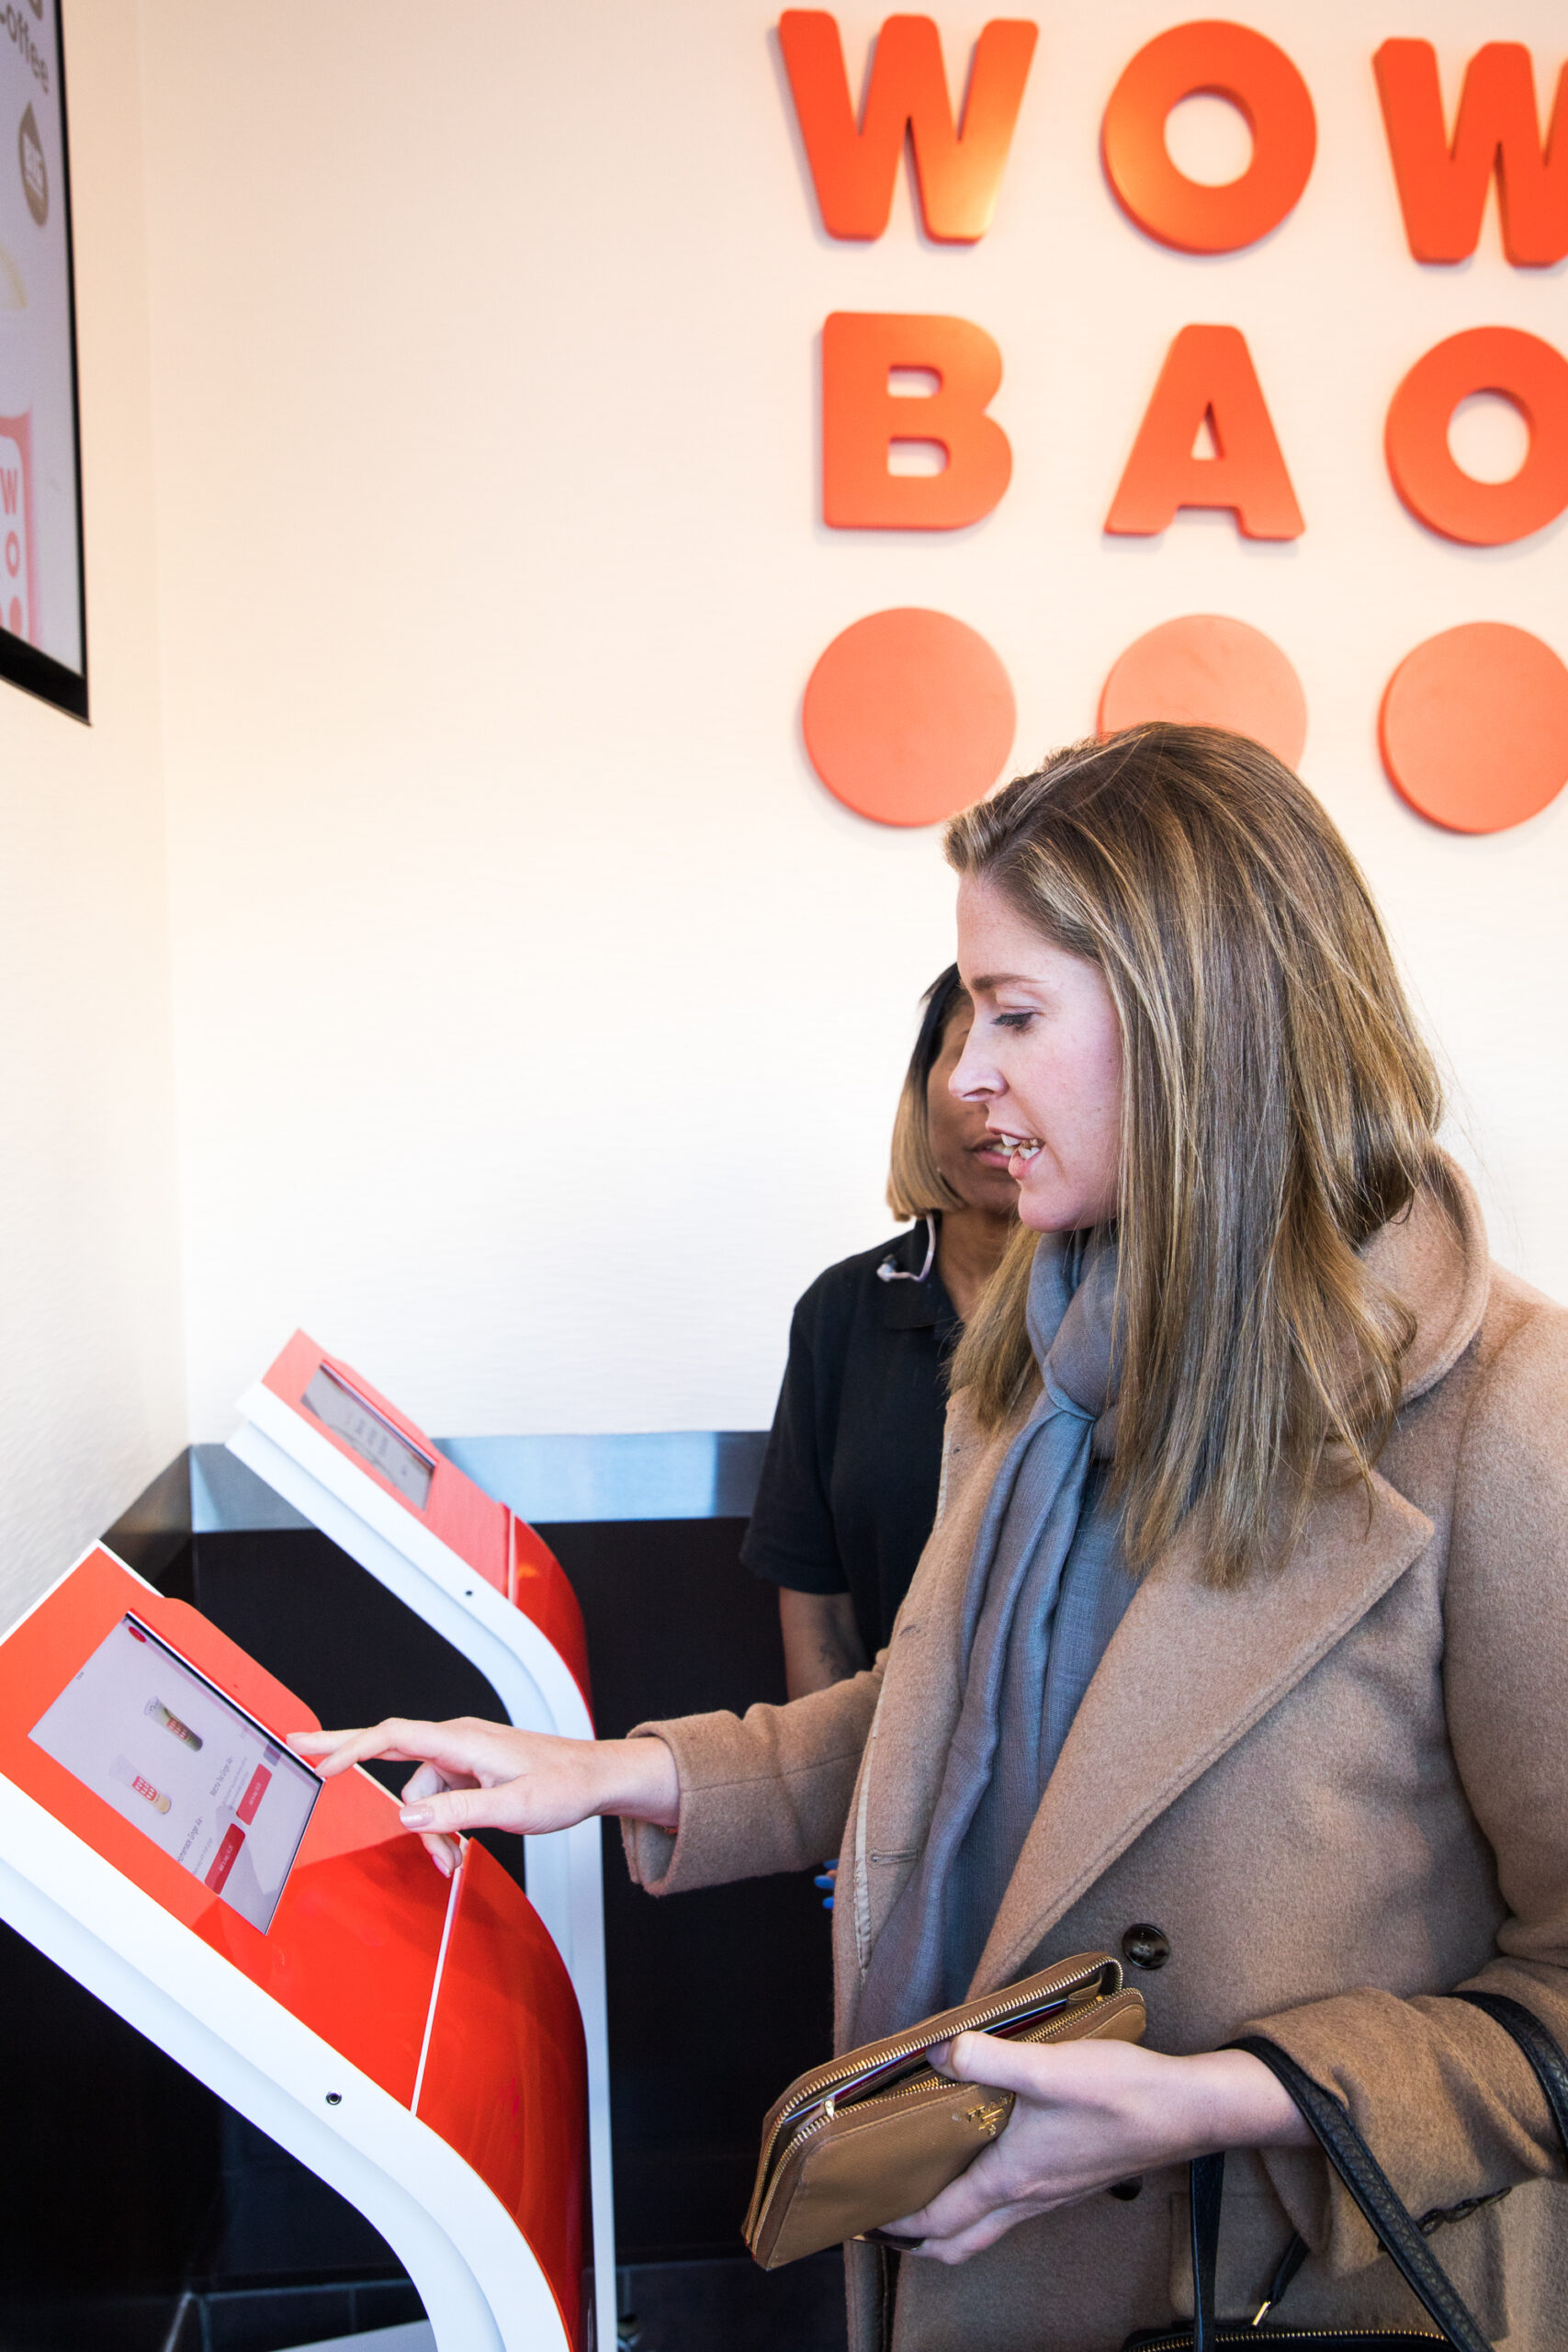 Wow Bao now offers food through high-tech vending machines